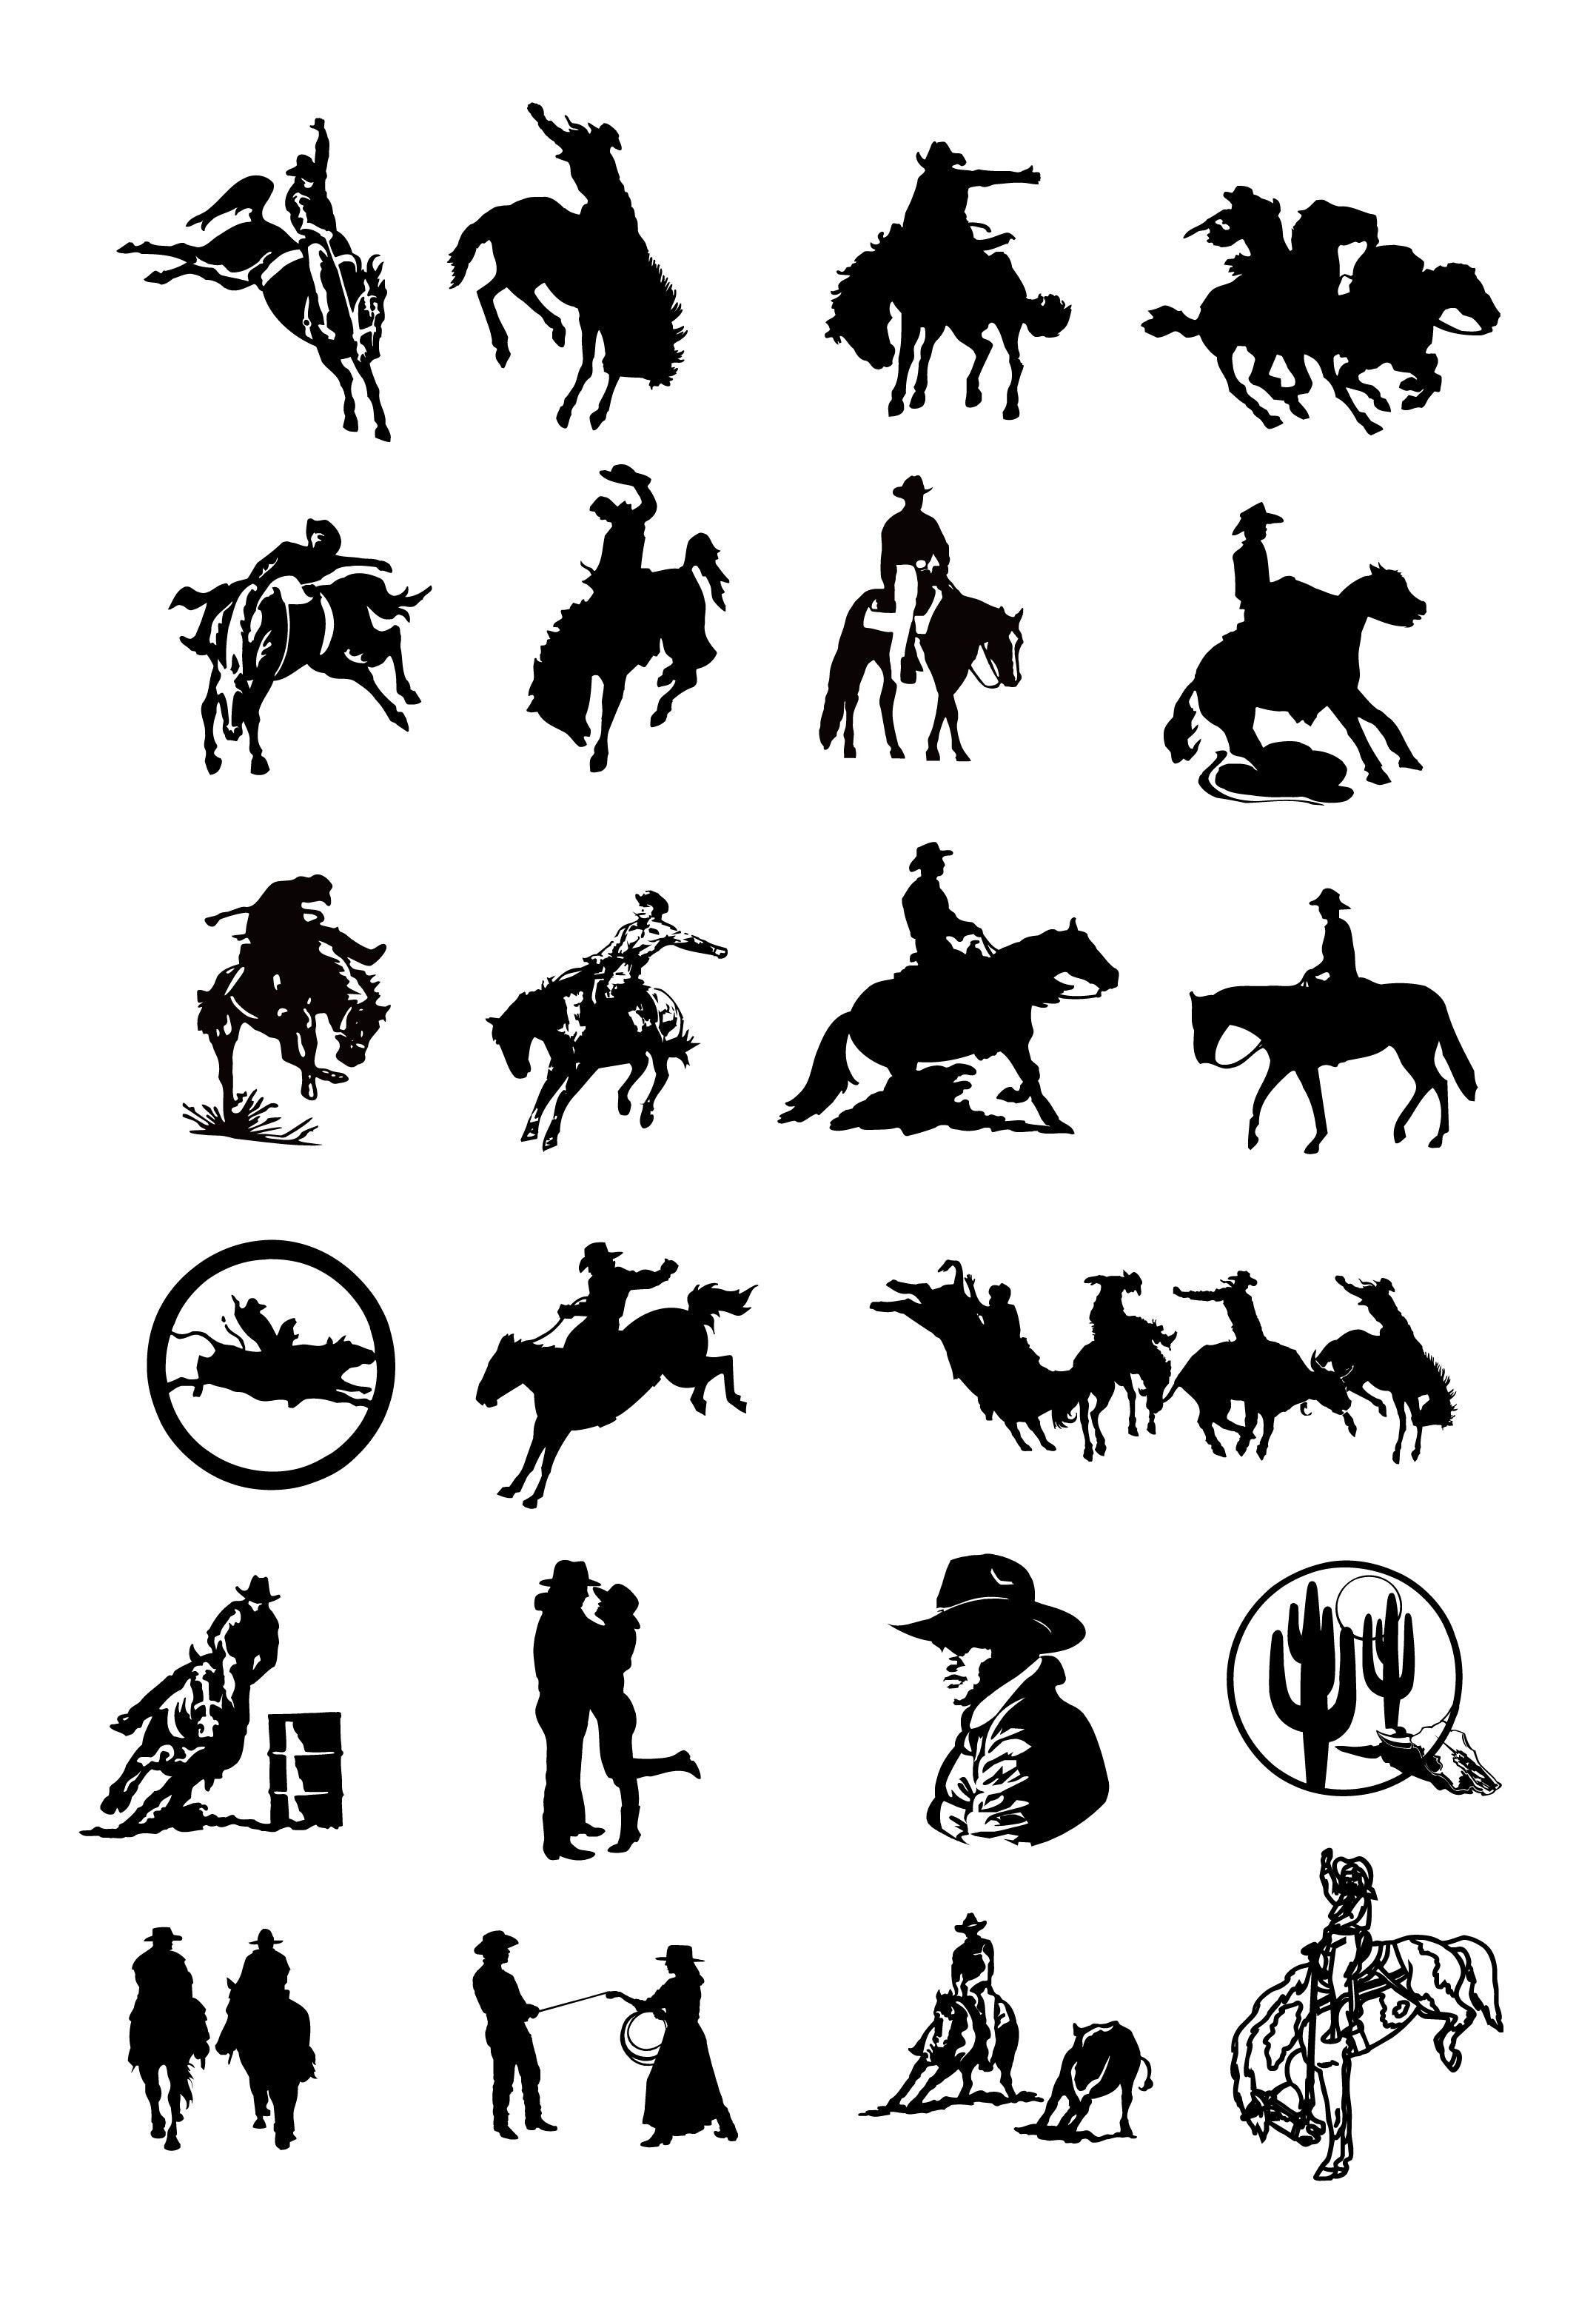 Praying Cowboy Black and White Logo - Free Black And White Cowboy Pictures, Download Free Clip Art, Free ...